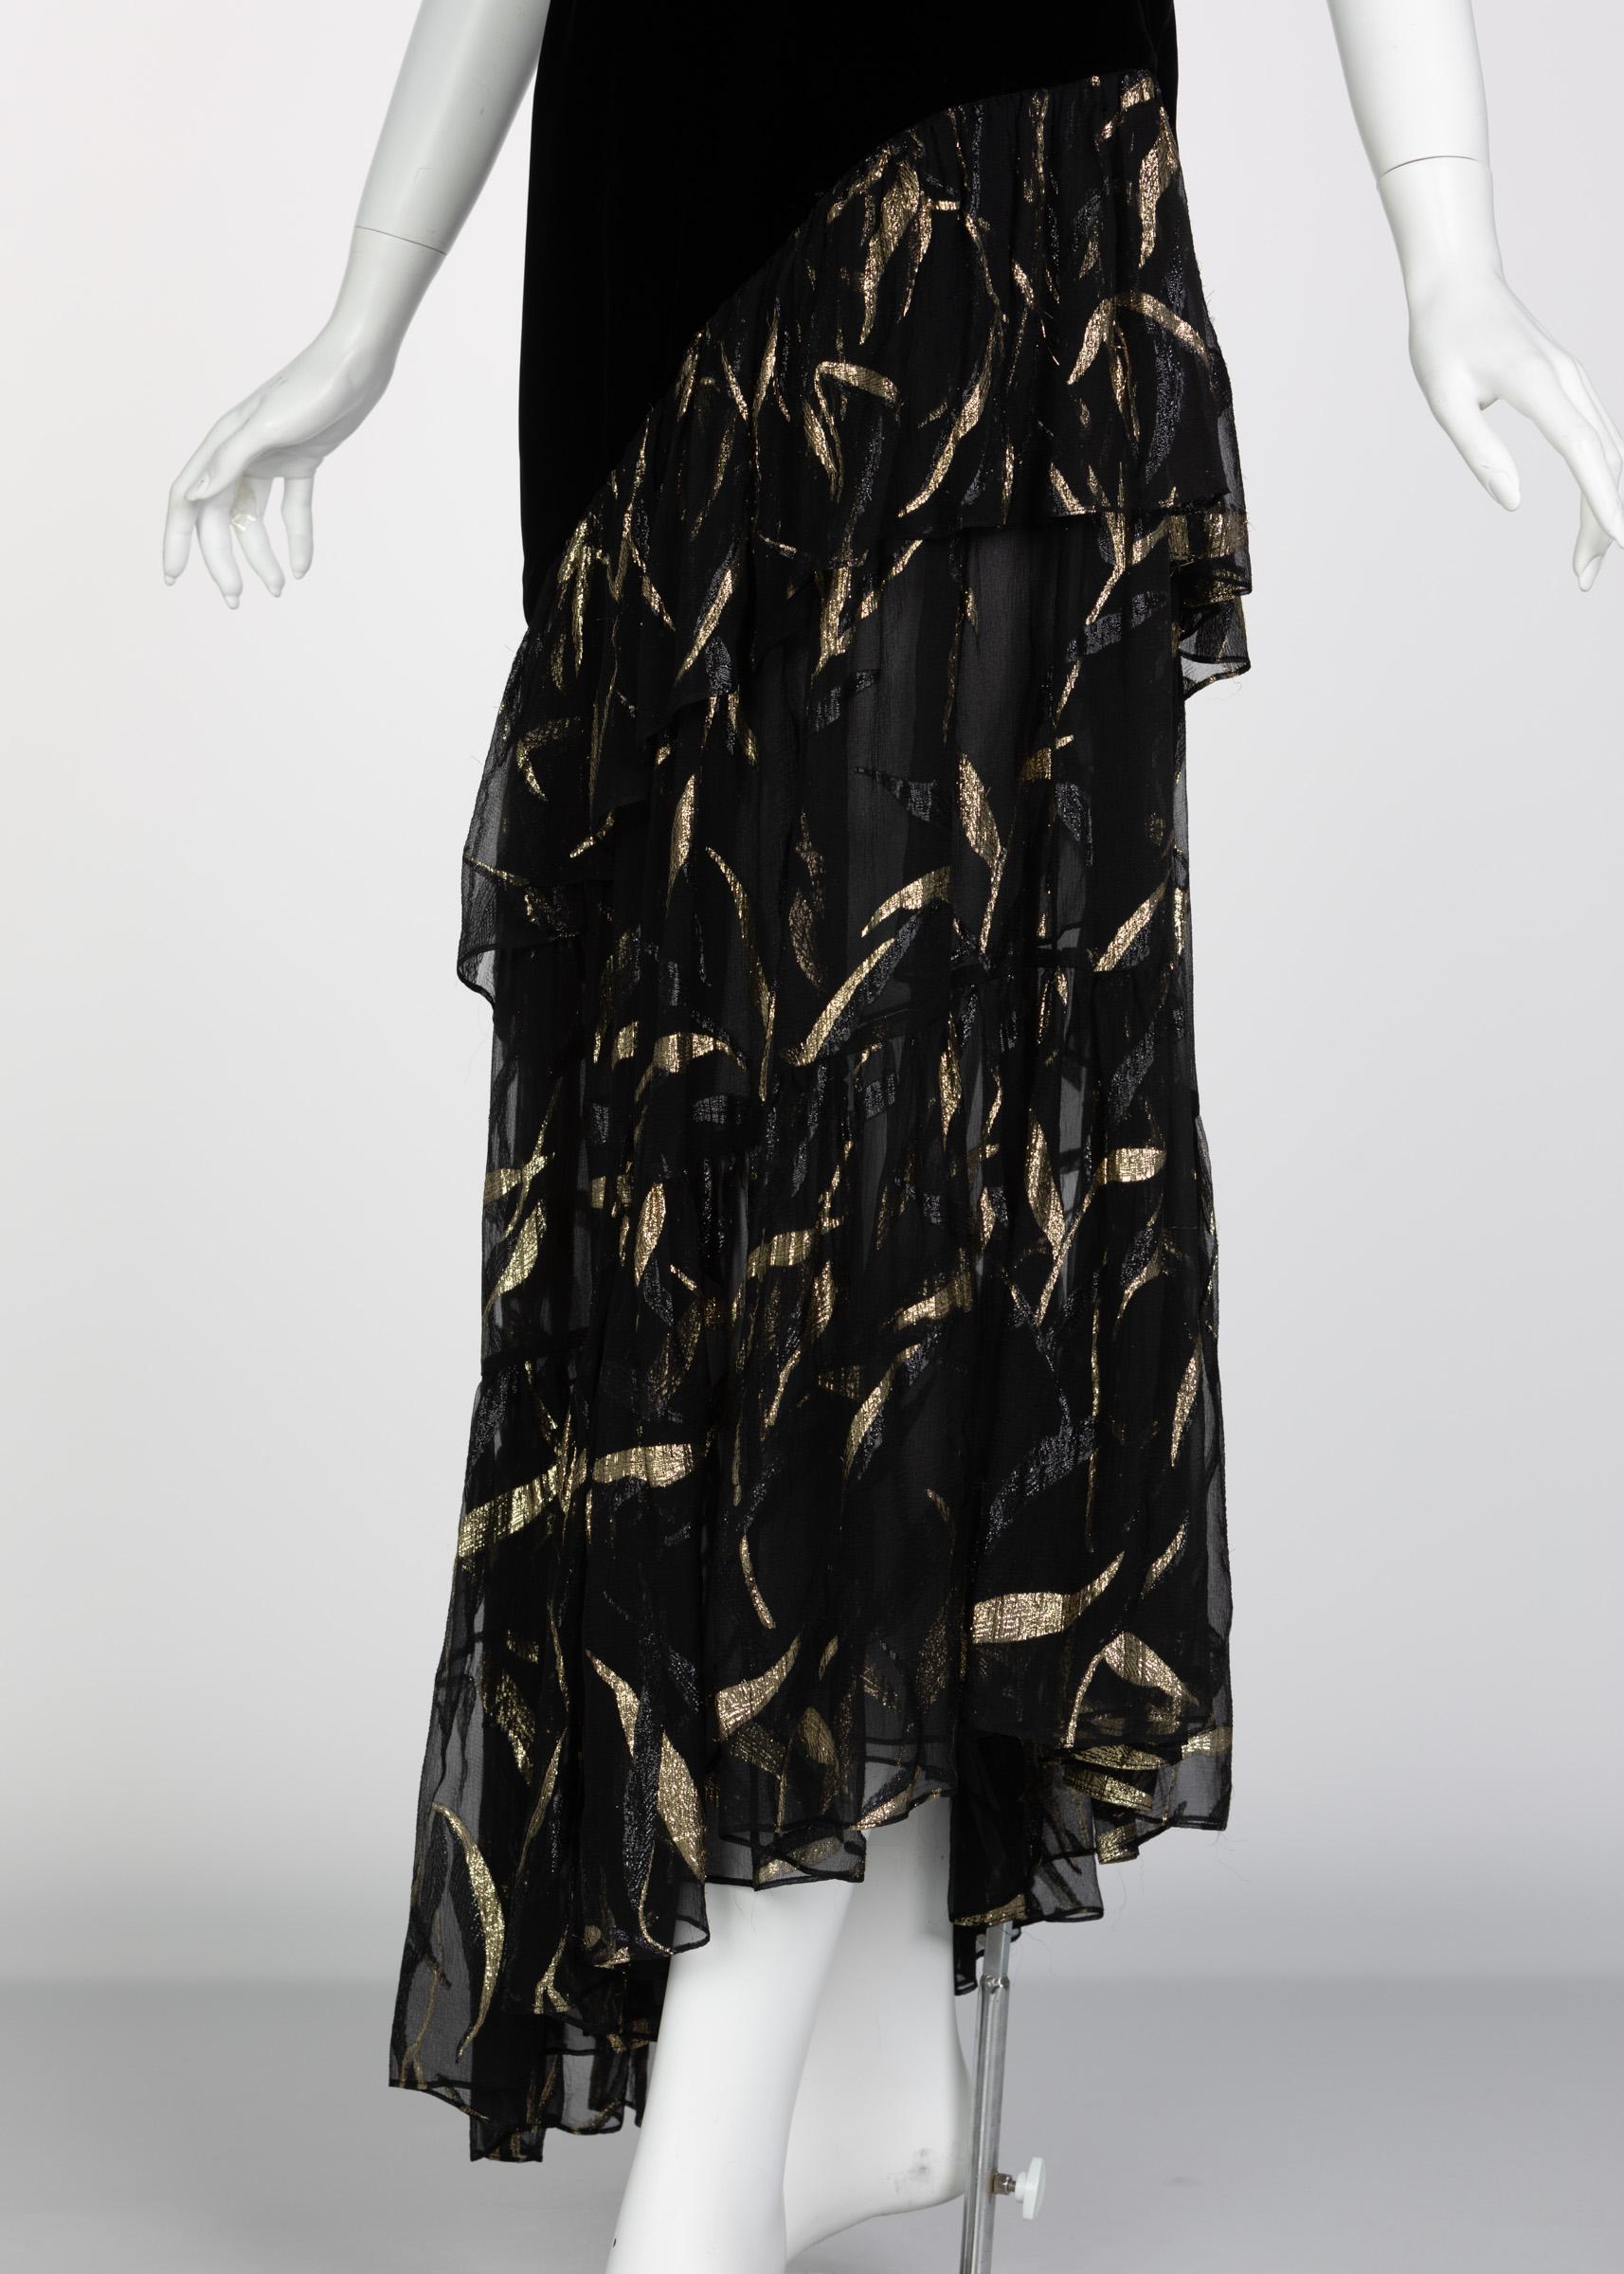 Saint Laurent YSL One shoulder Black Velvet Metallic Layered Dress, 1980s For Sale 5